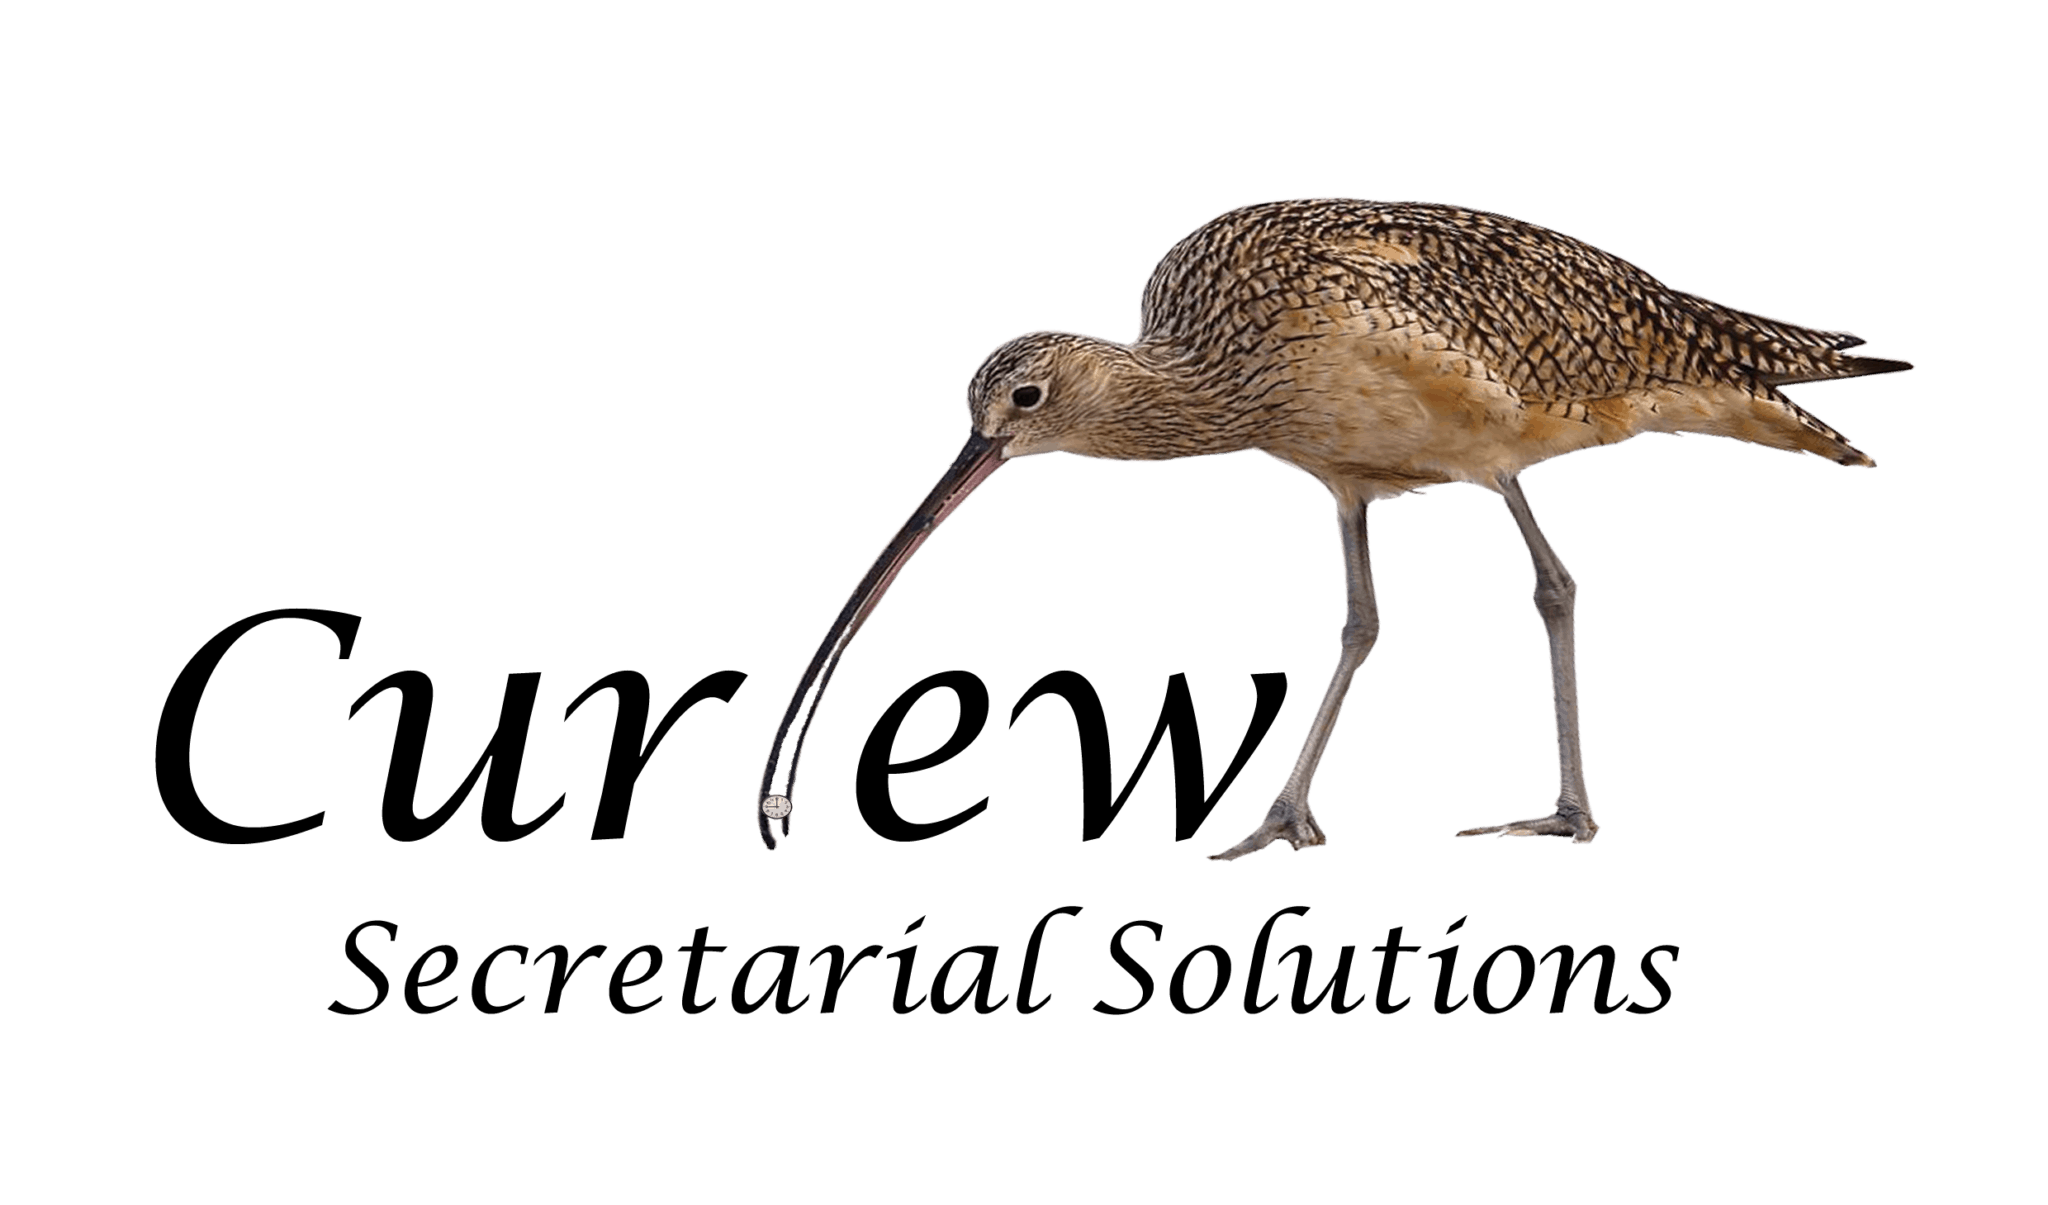 Curlew Secretarial Solutions